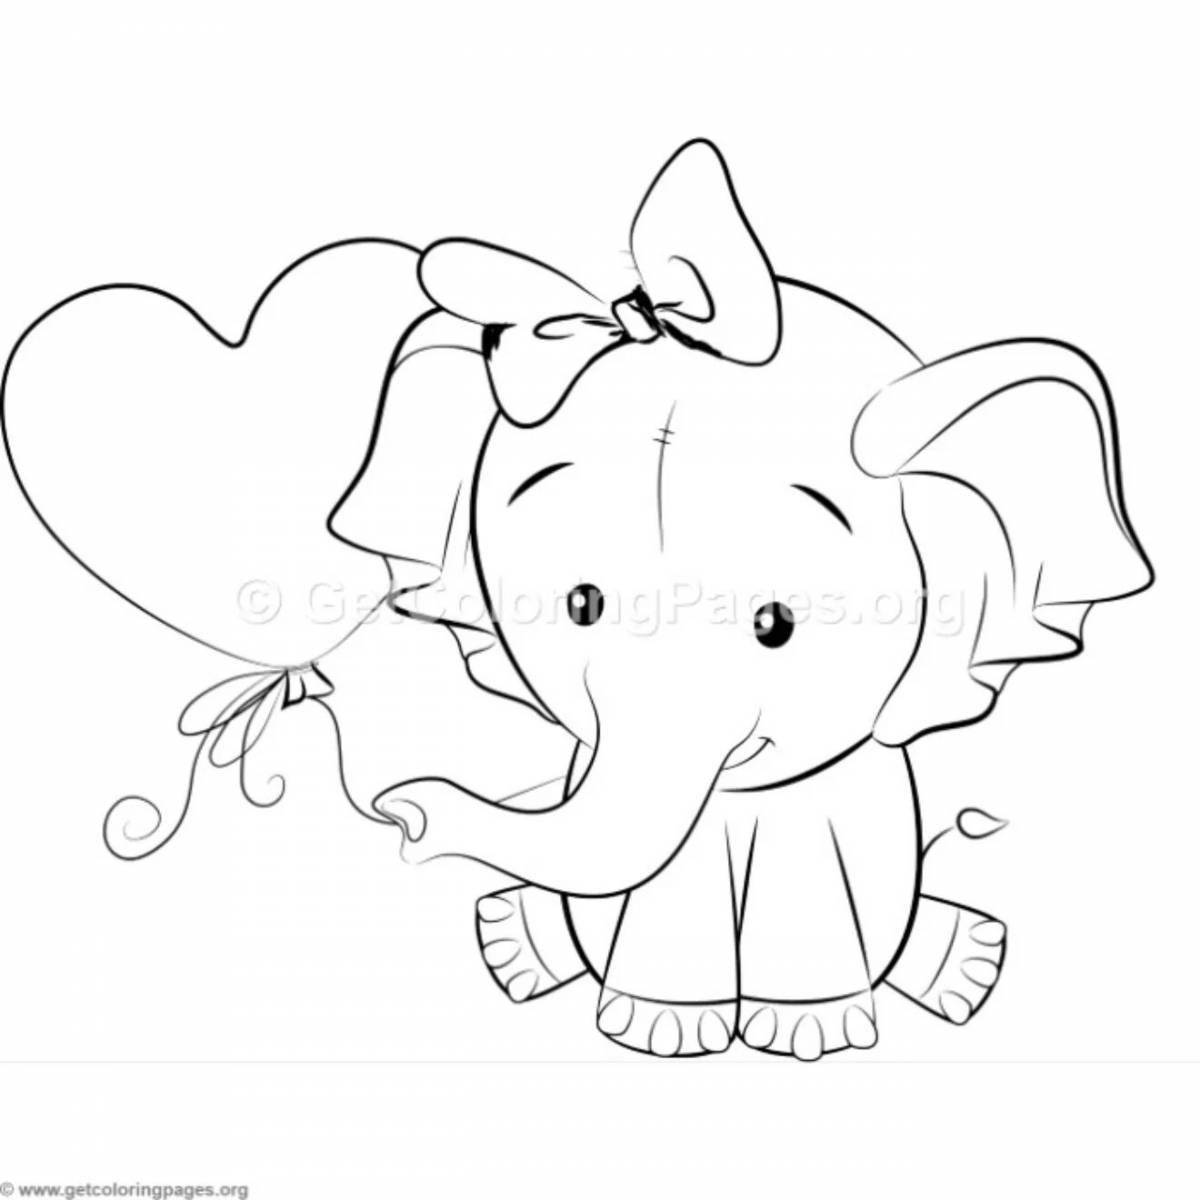 Dazzling coloring elephant